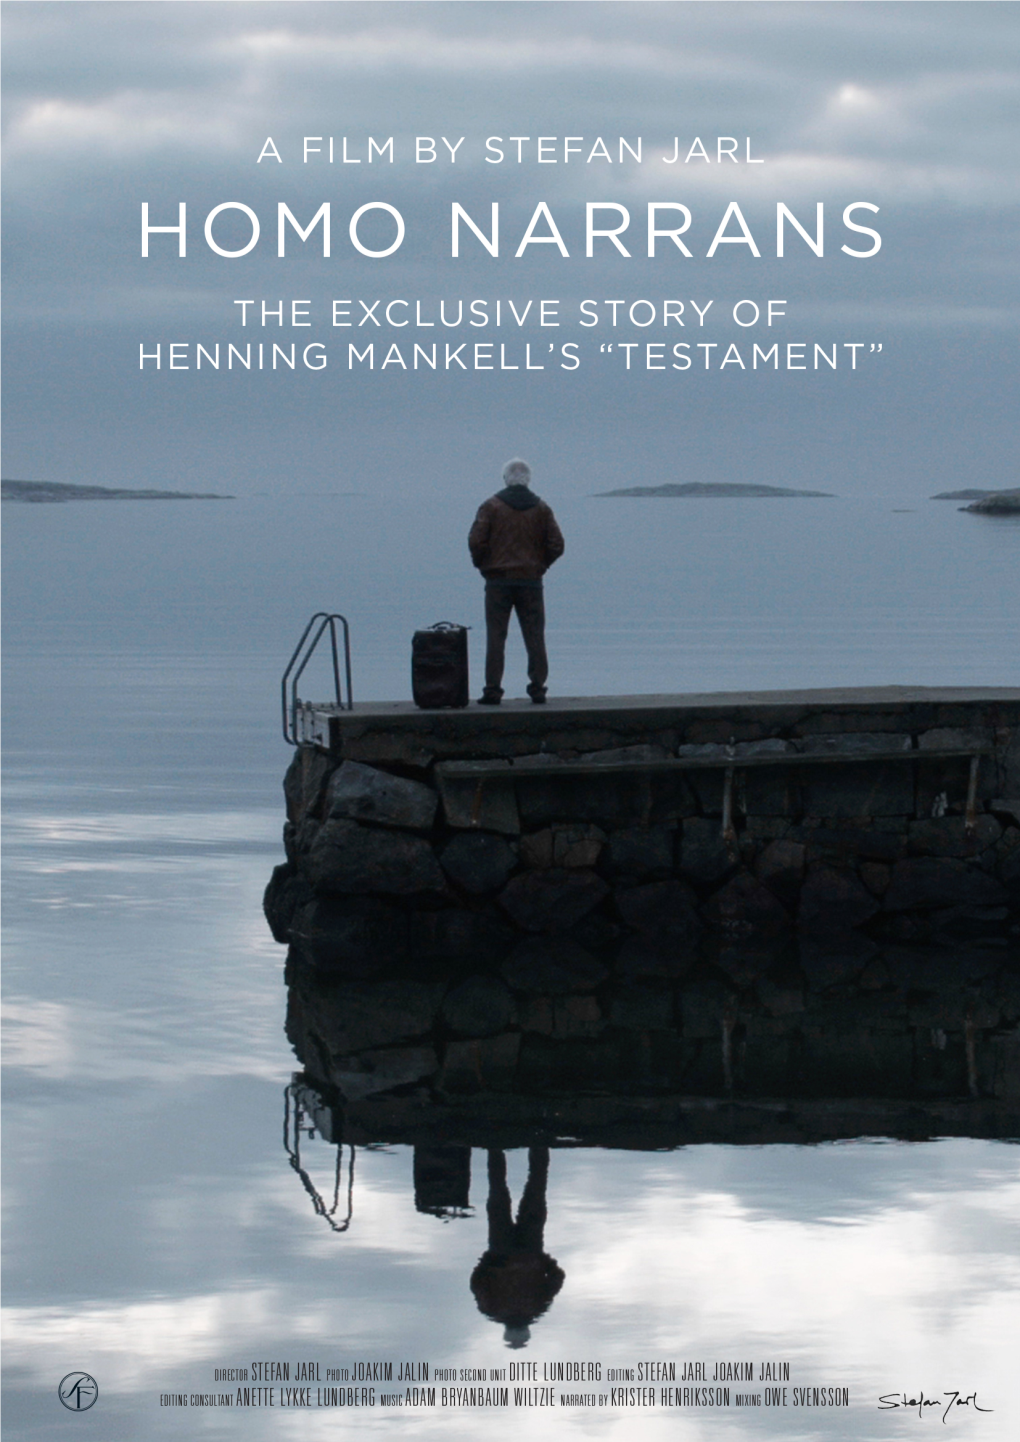 Homo Narrans Henning Mankell’S “Testament”